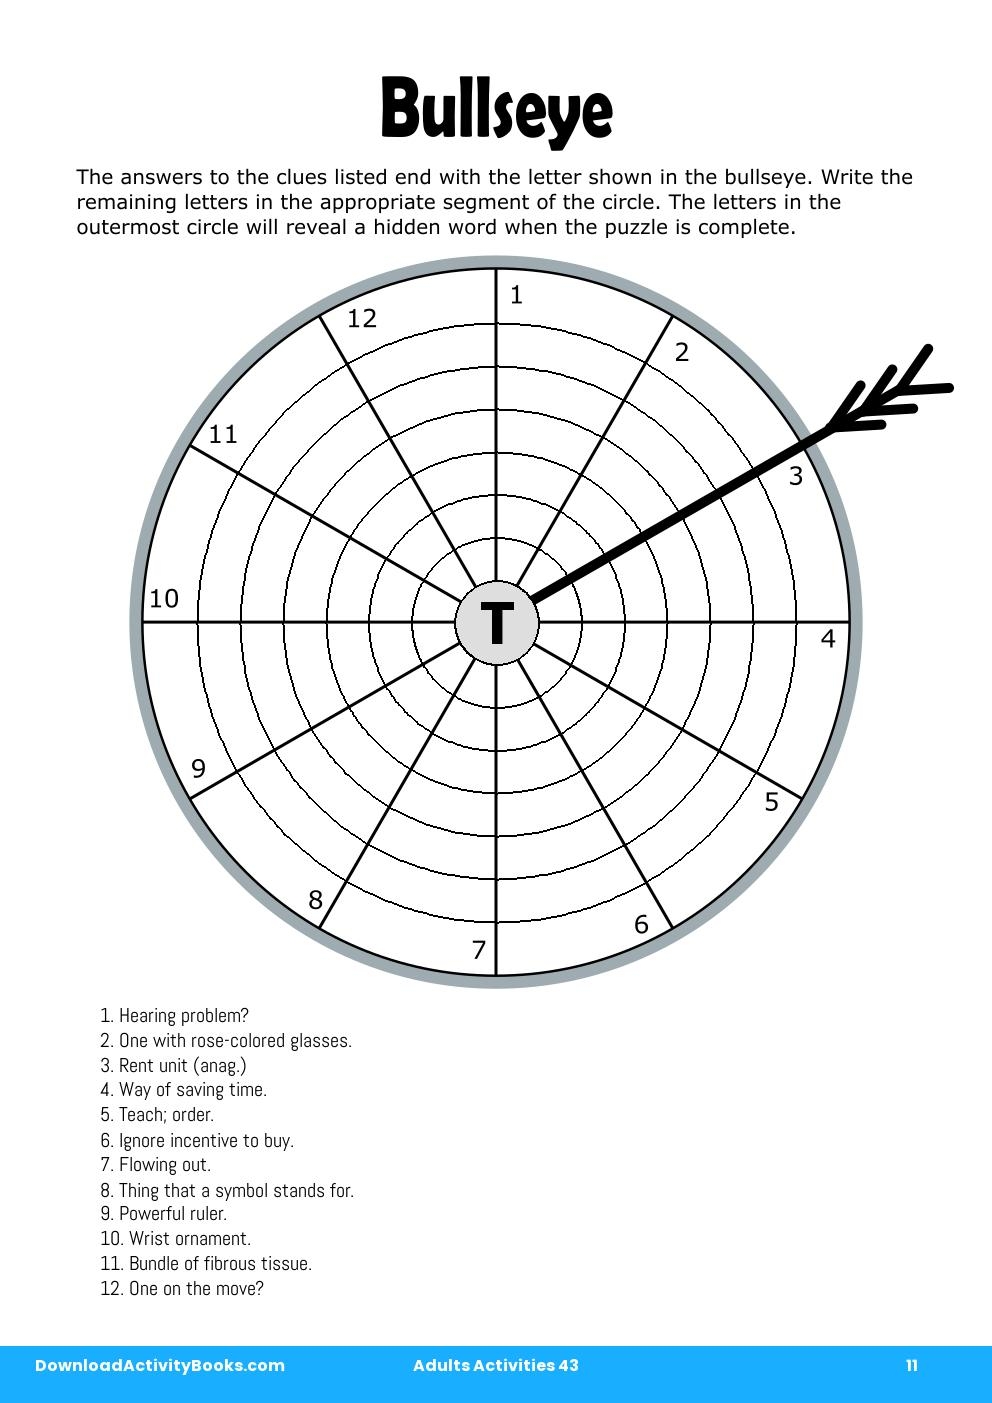 Bullseye in Adults Activities 43